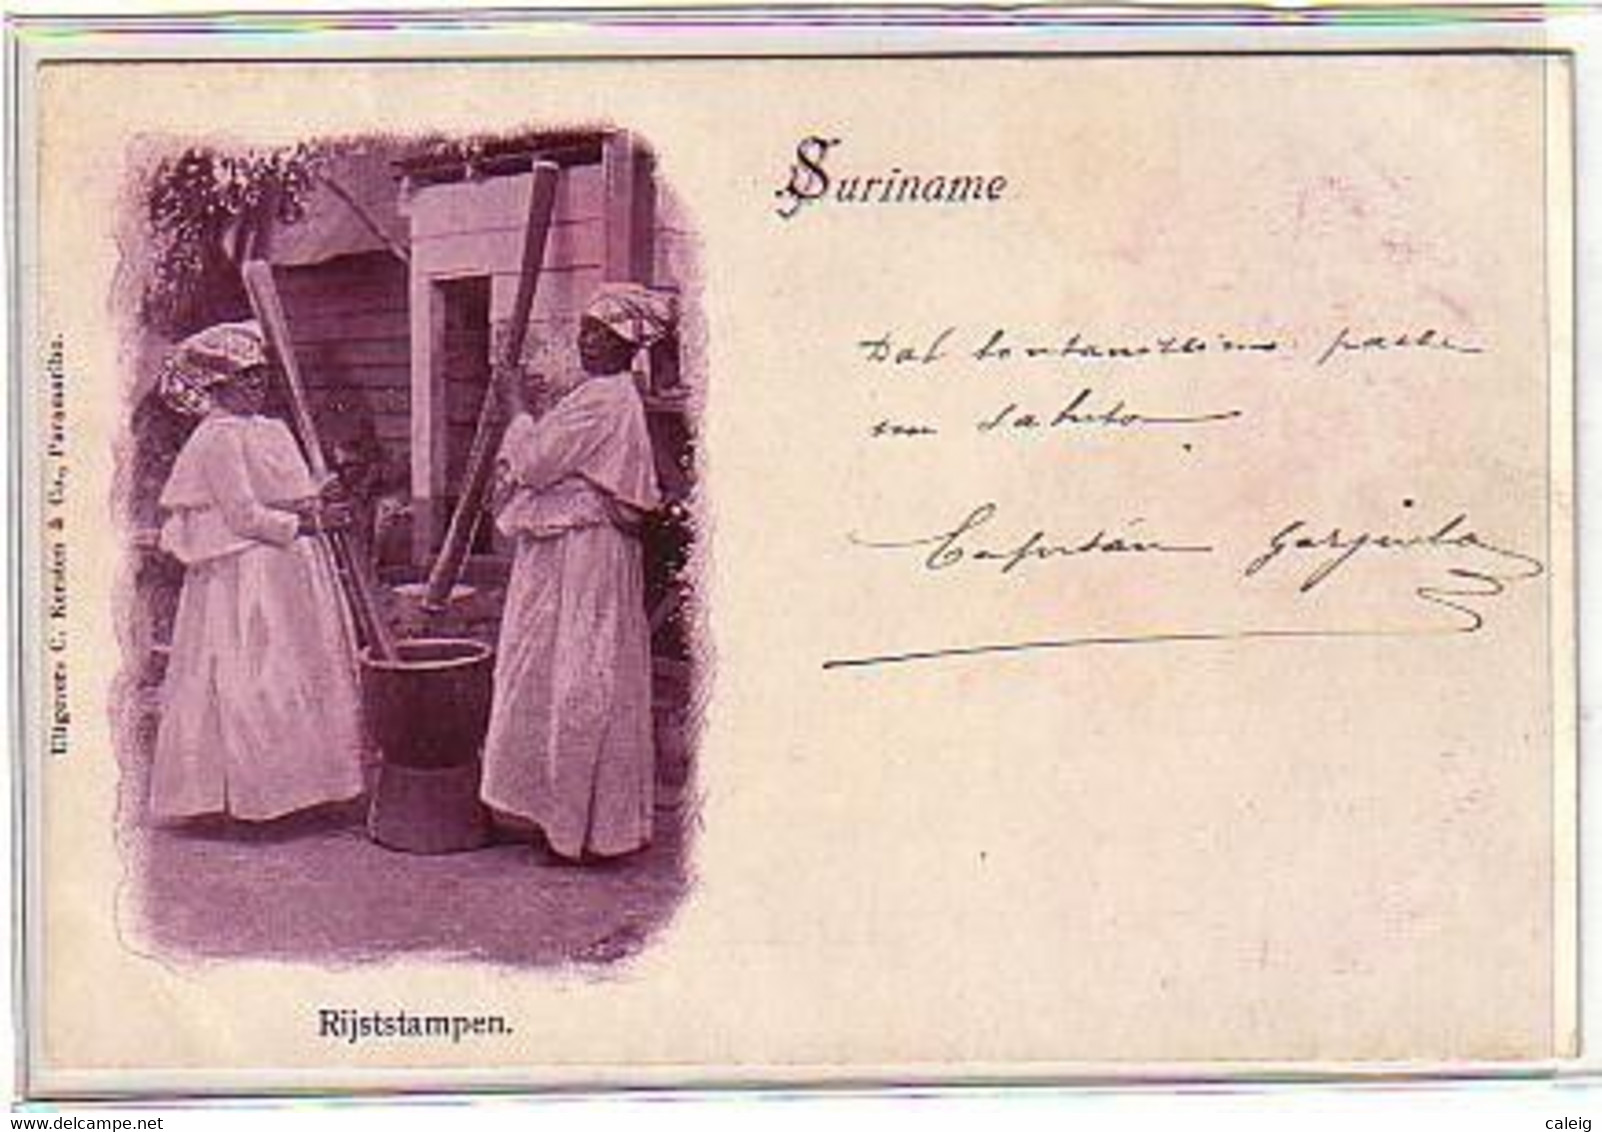 SURINAME - Rijstampen Ca 1900 Used In Letter - Suriname